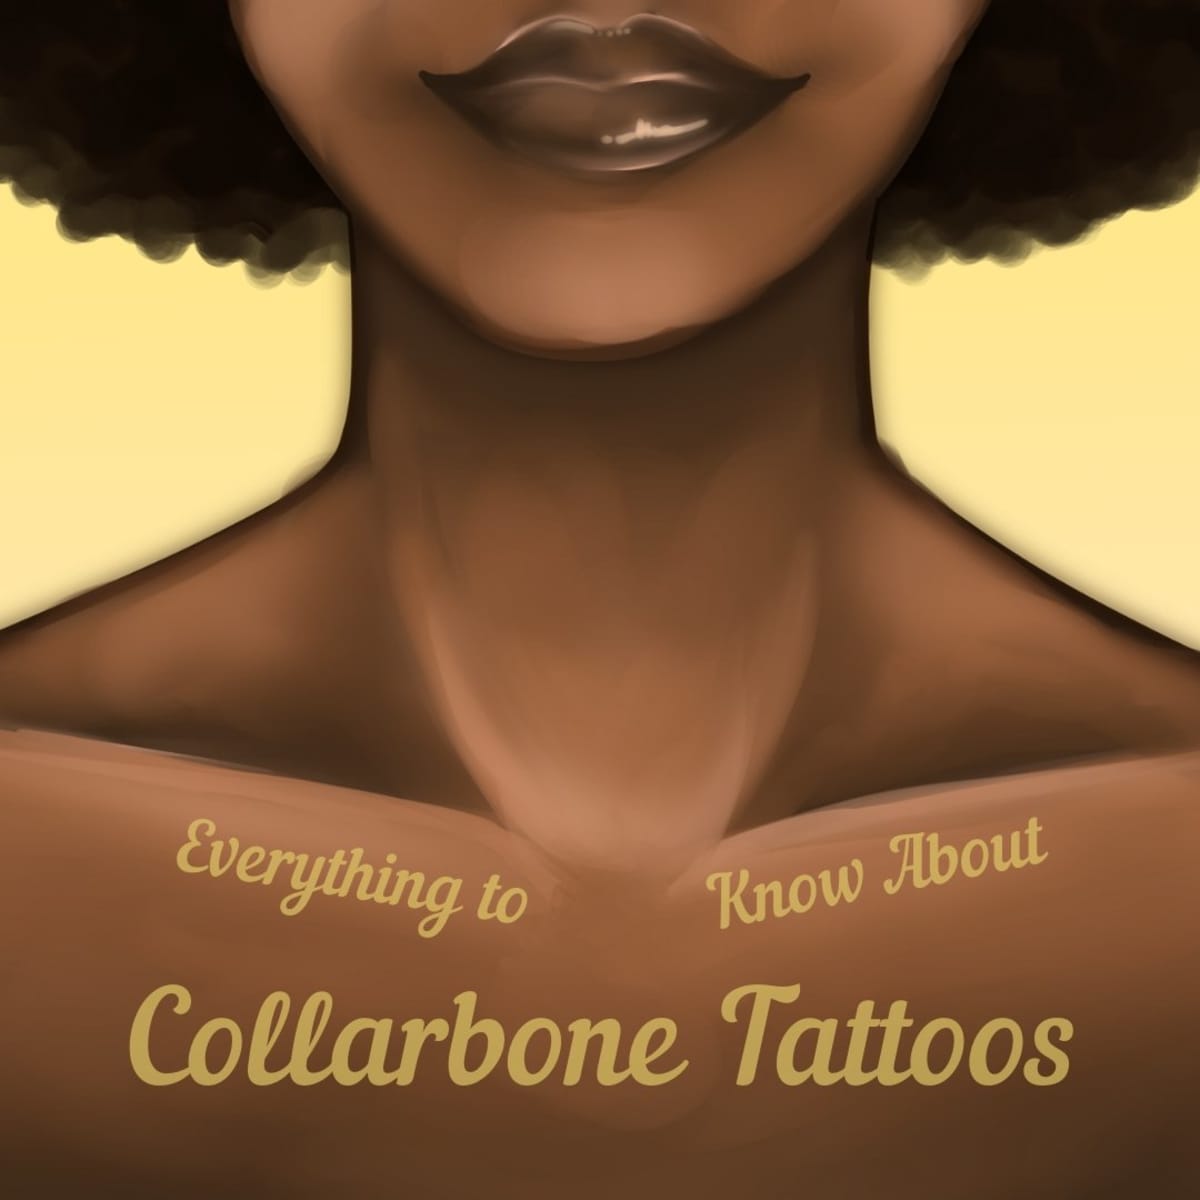 Collar Bone Tattoo Ideas  Designs for Collar Bone Tattoos